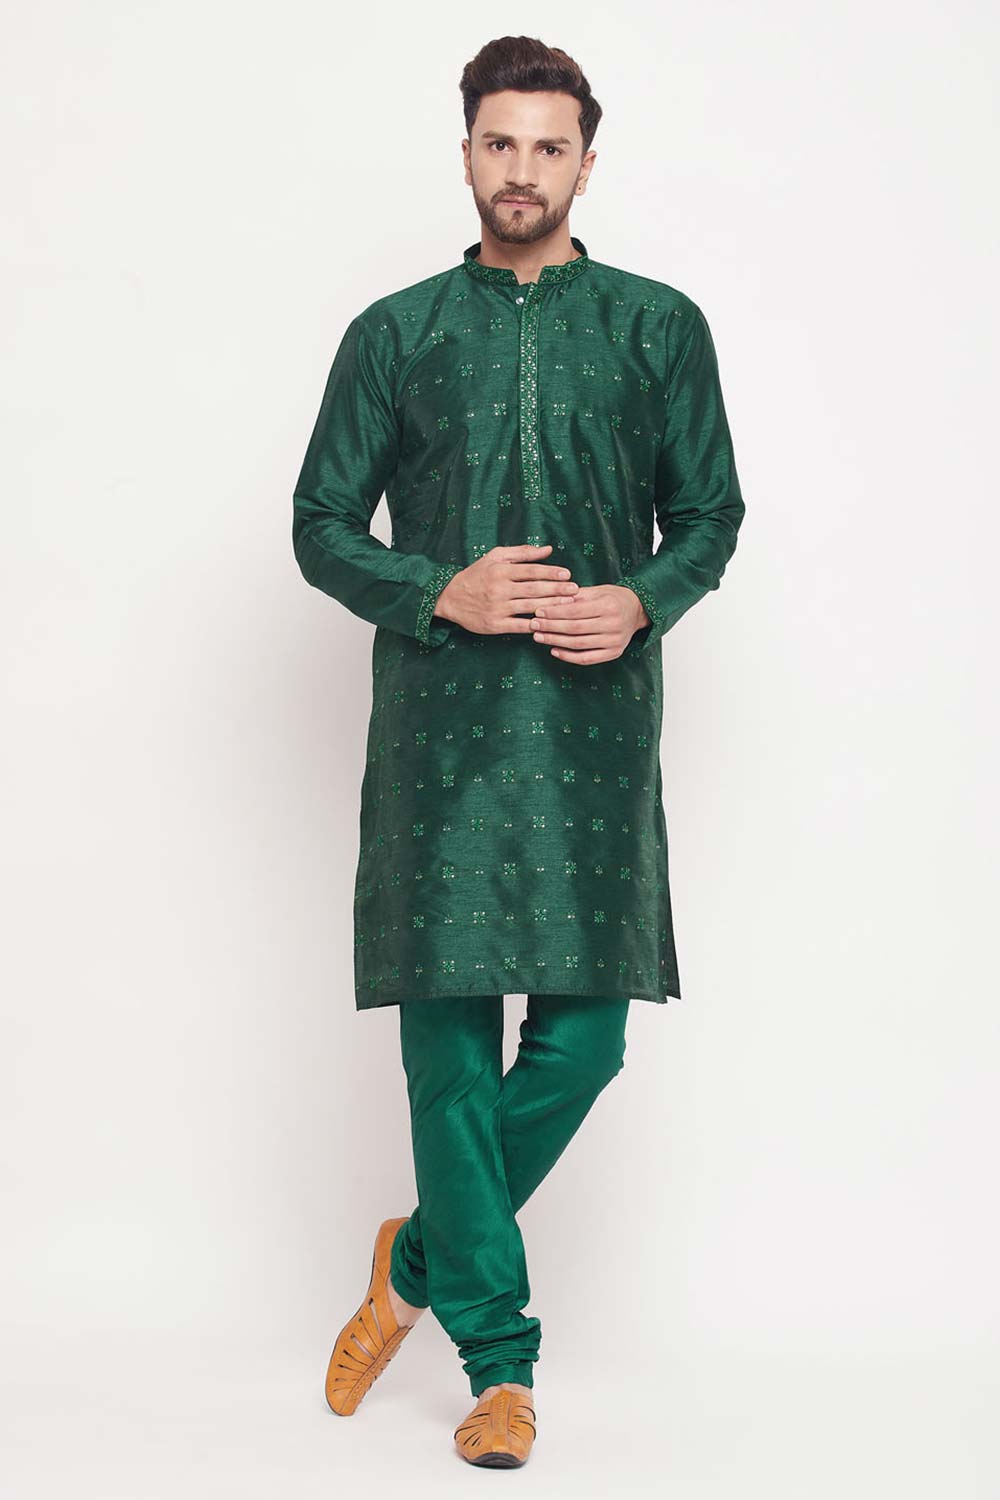 Buy Men's Green Silk Blend Ethnic Motif Woven Design Short Kurta Online - Zoom In